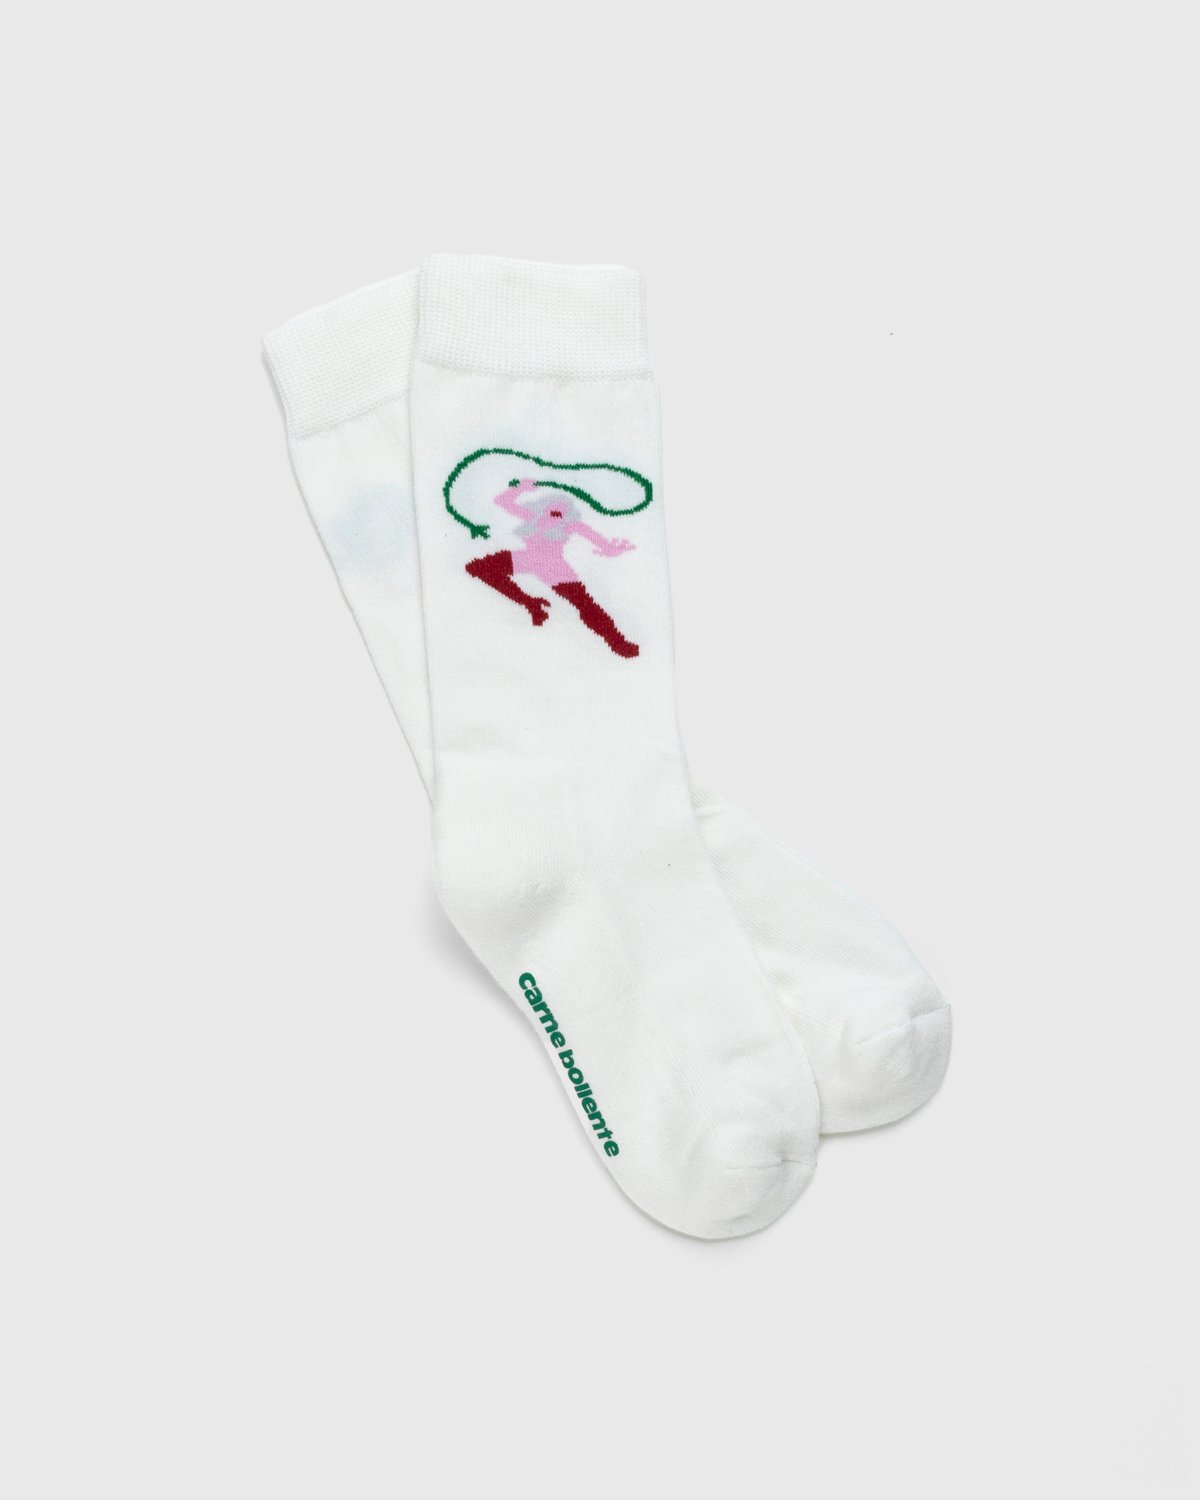 Carne Bollente - Domination Fantasies Socks White - Accessories - White - Image 1